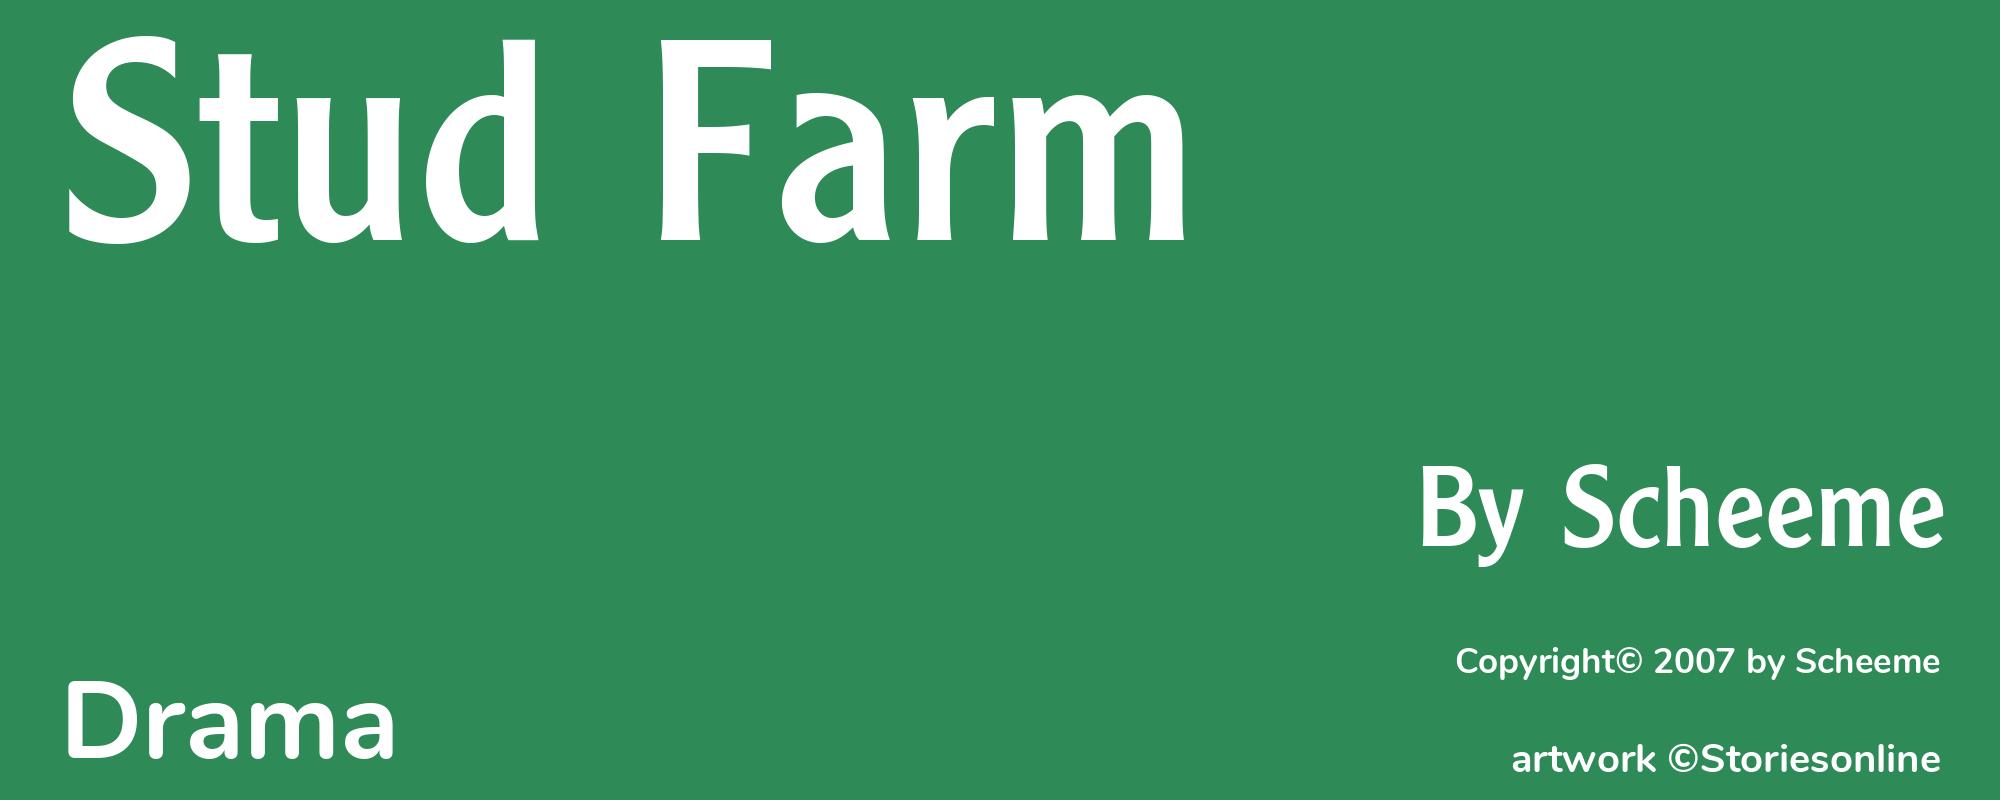 Stud Farm - Cover